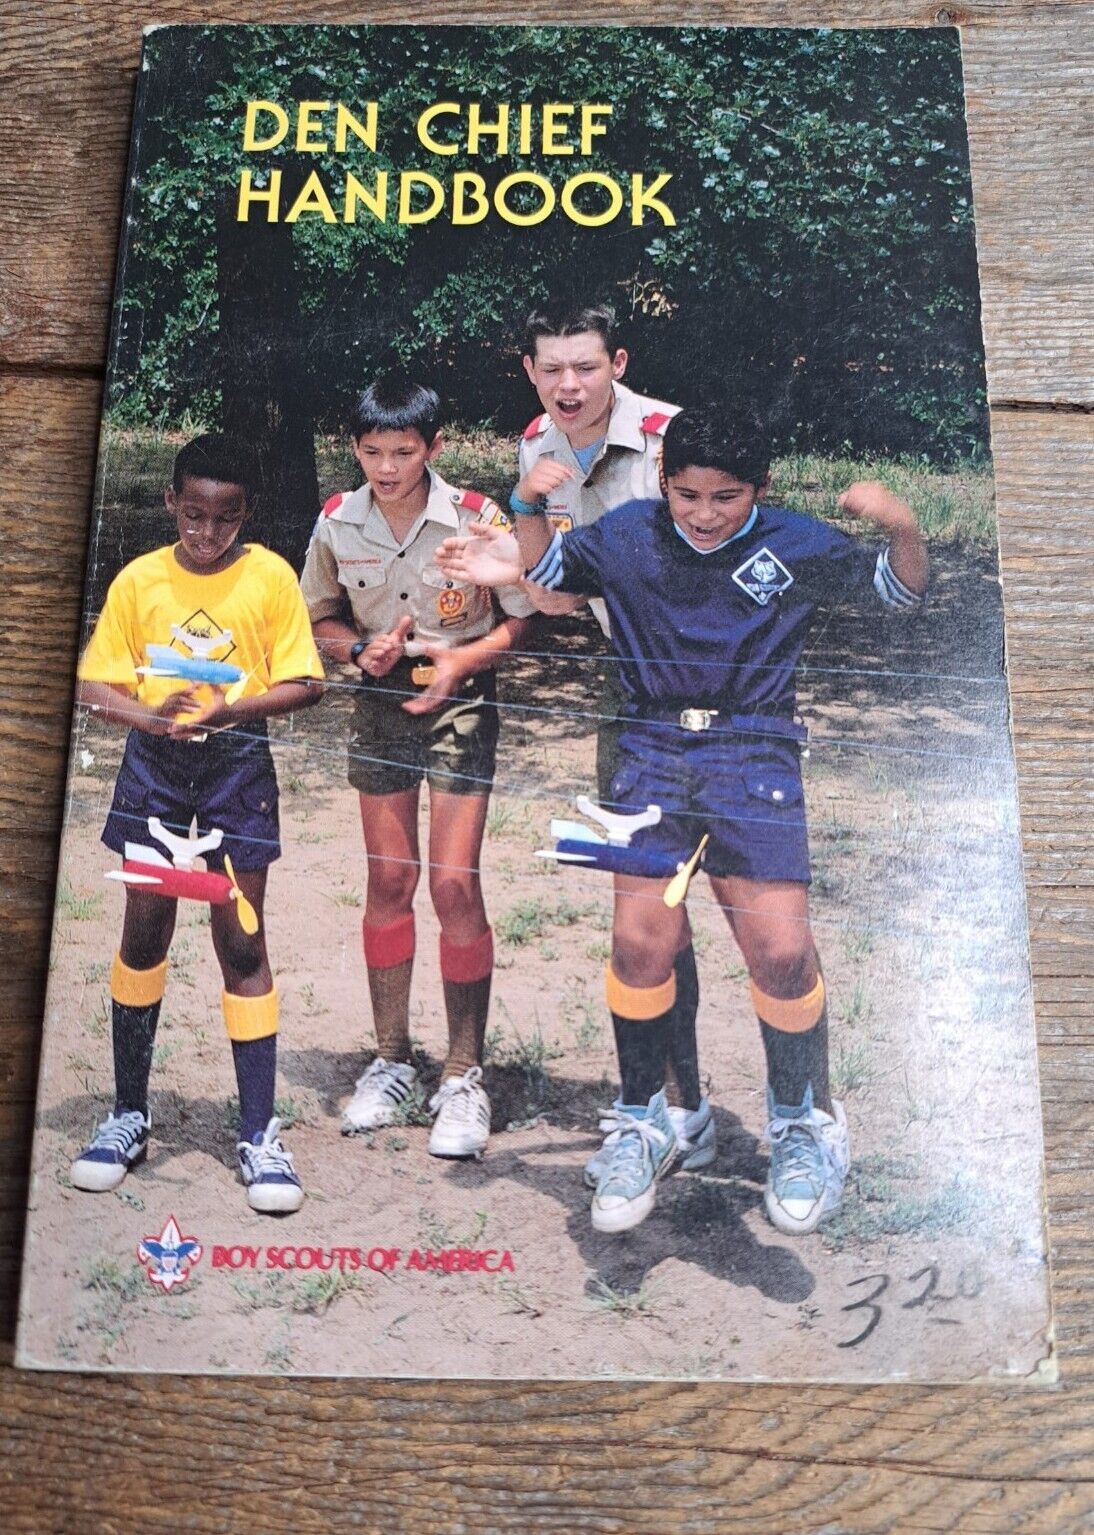 Official 1994 Boy Scouts of America Den Chief Handbook